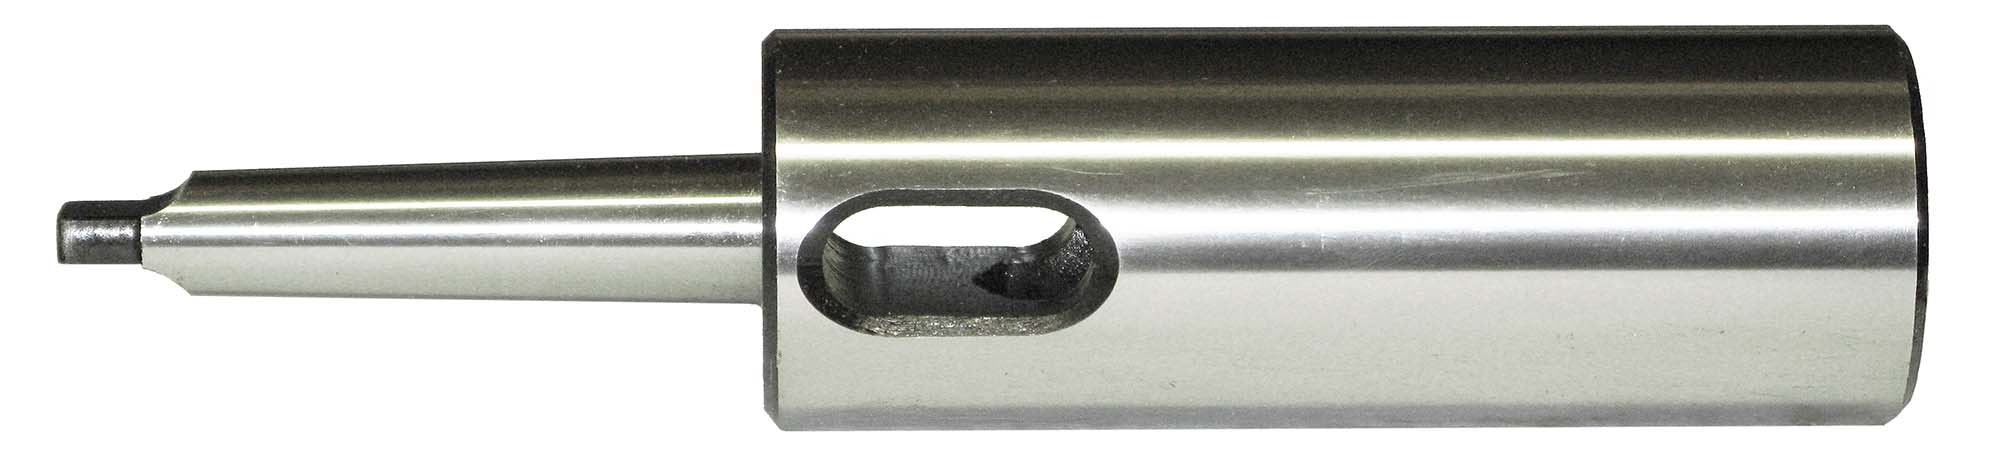 4 Morse Taper(hole)-2 Morse Taper(shank) Extension Socket, SL4-2